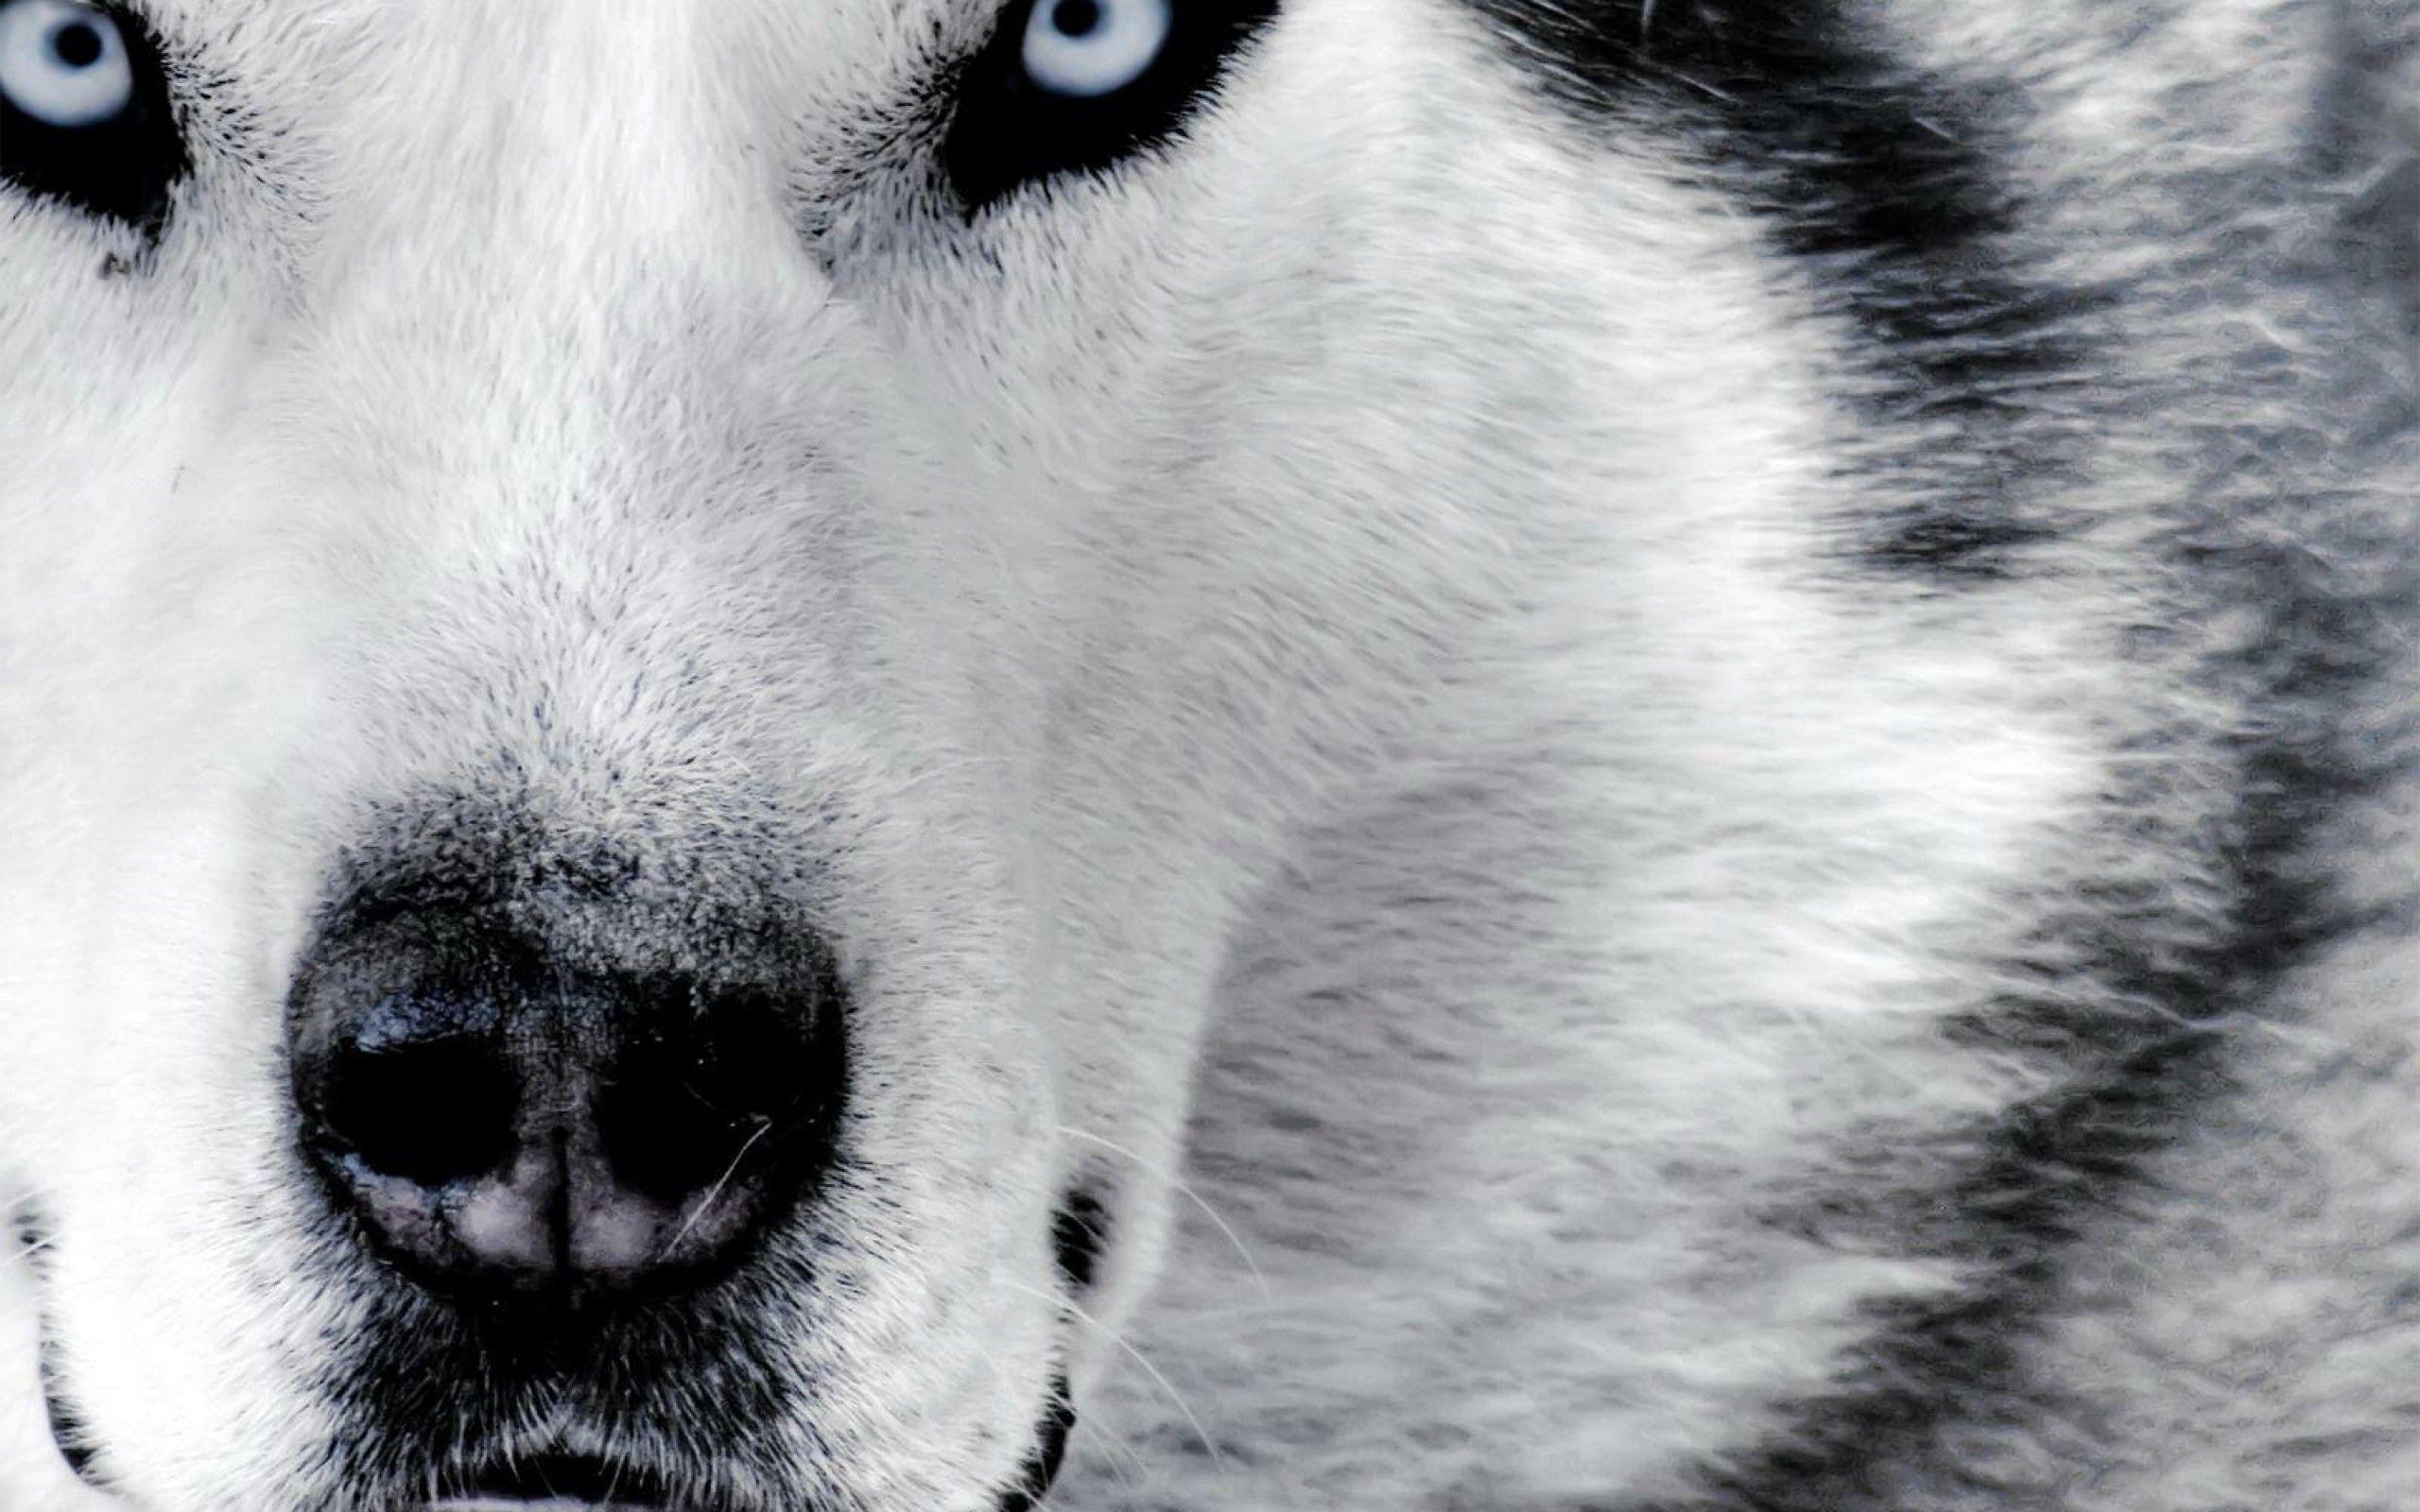 Wolf Desktop Background Pictures